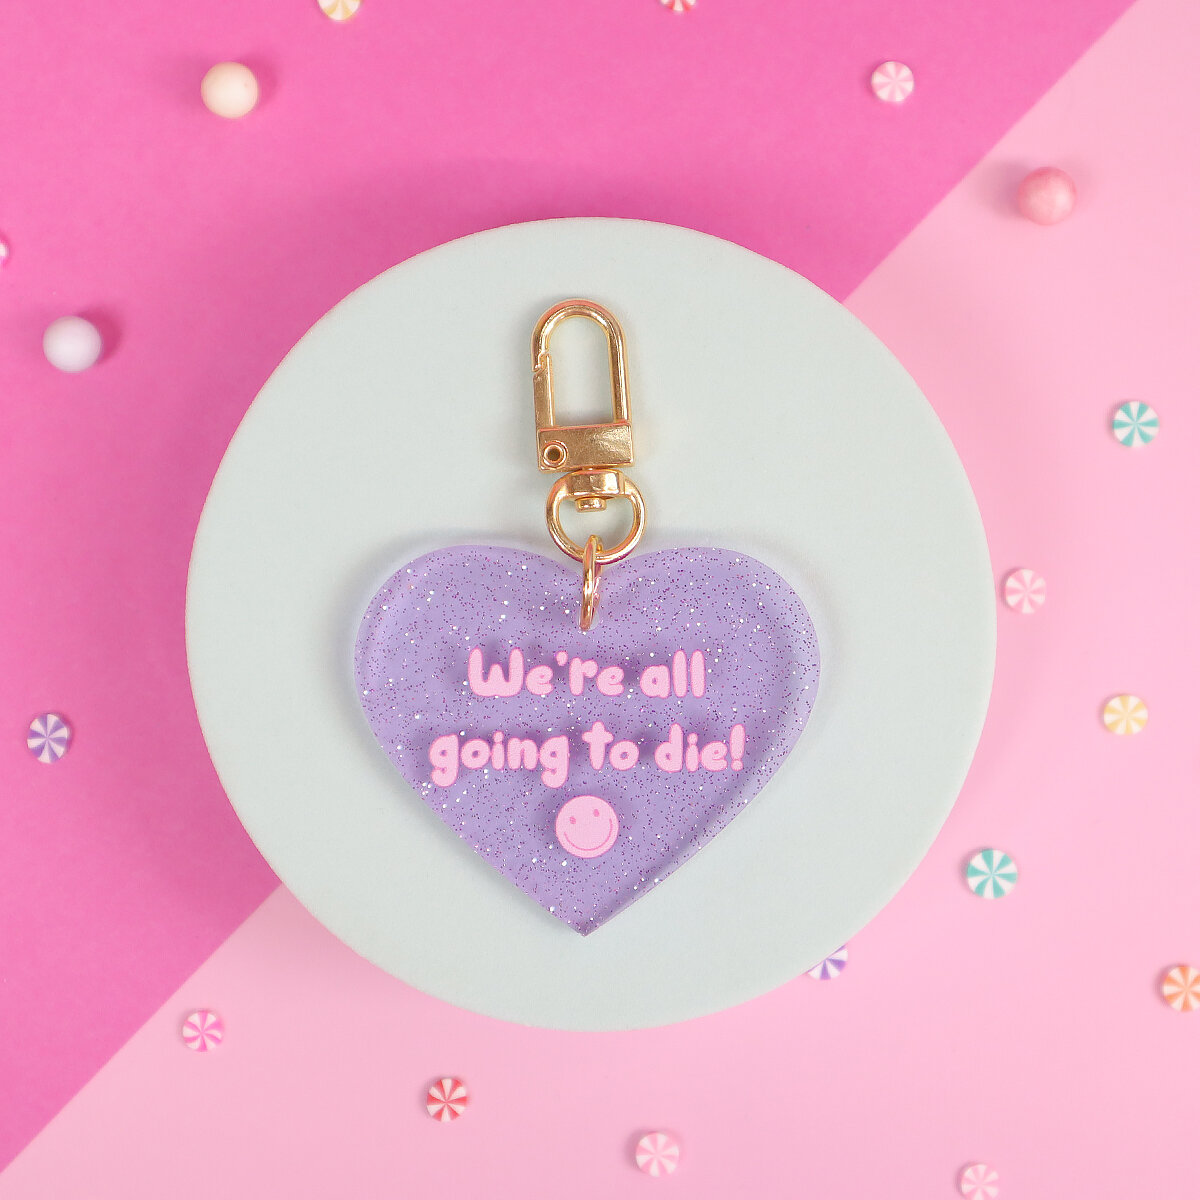 Glitter heart key ring - Going to die